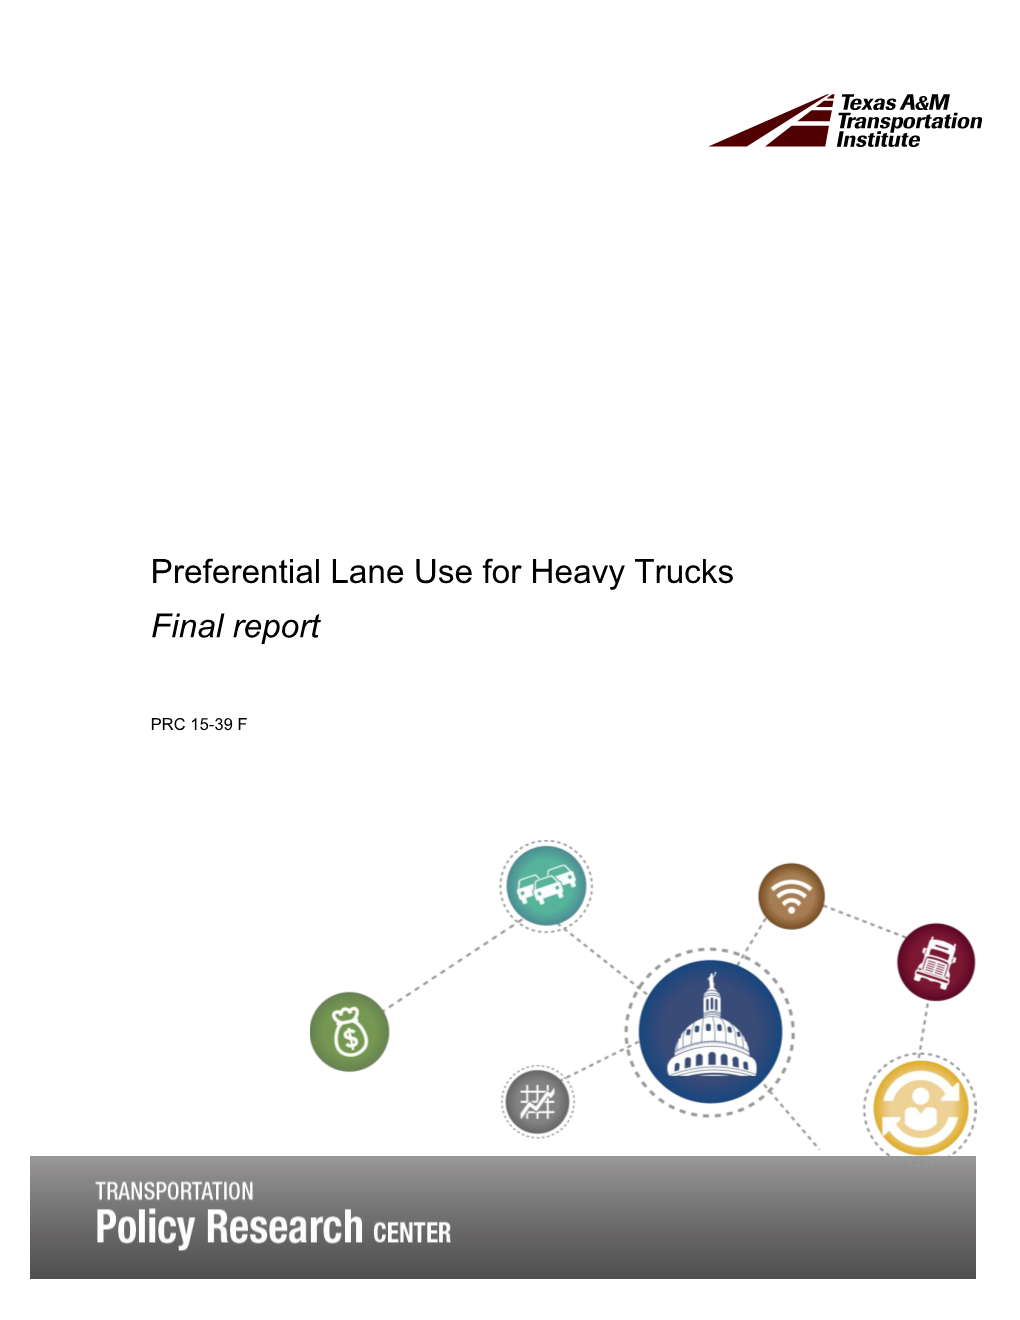 Preferential Lane Use for Heavy Trucks Final Report